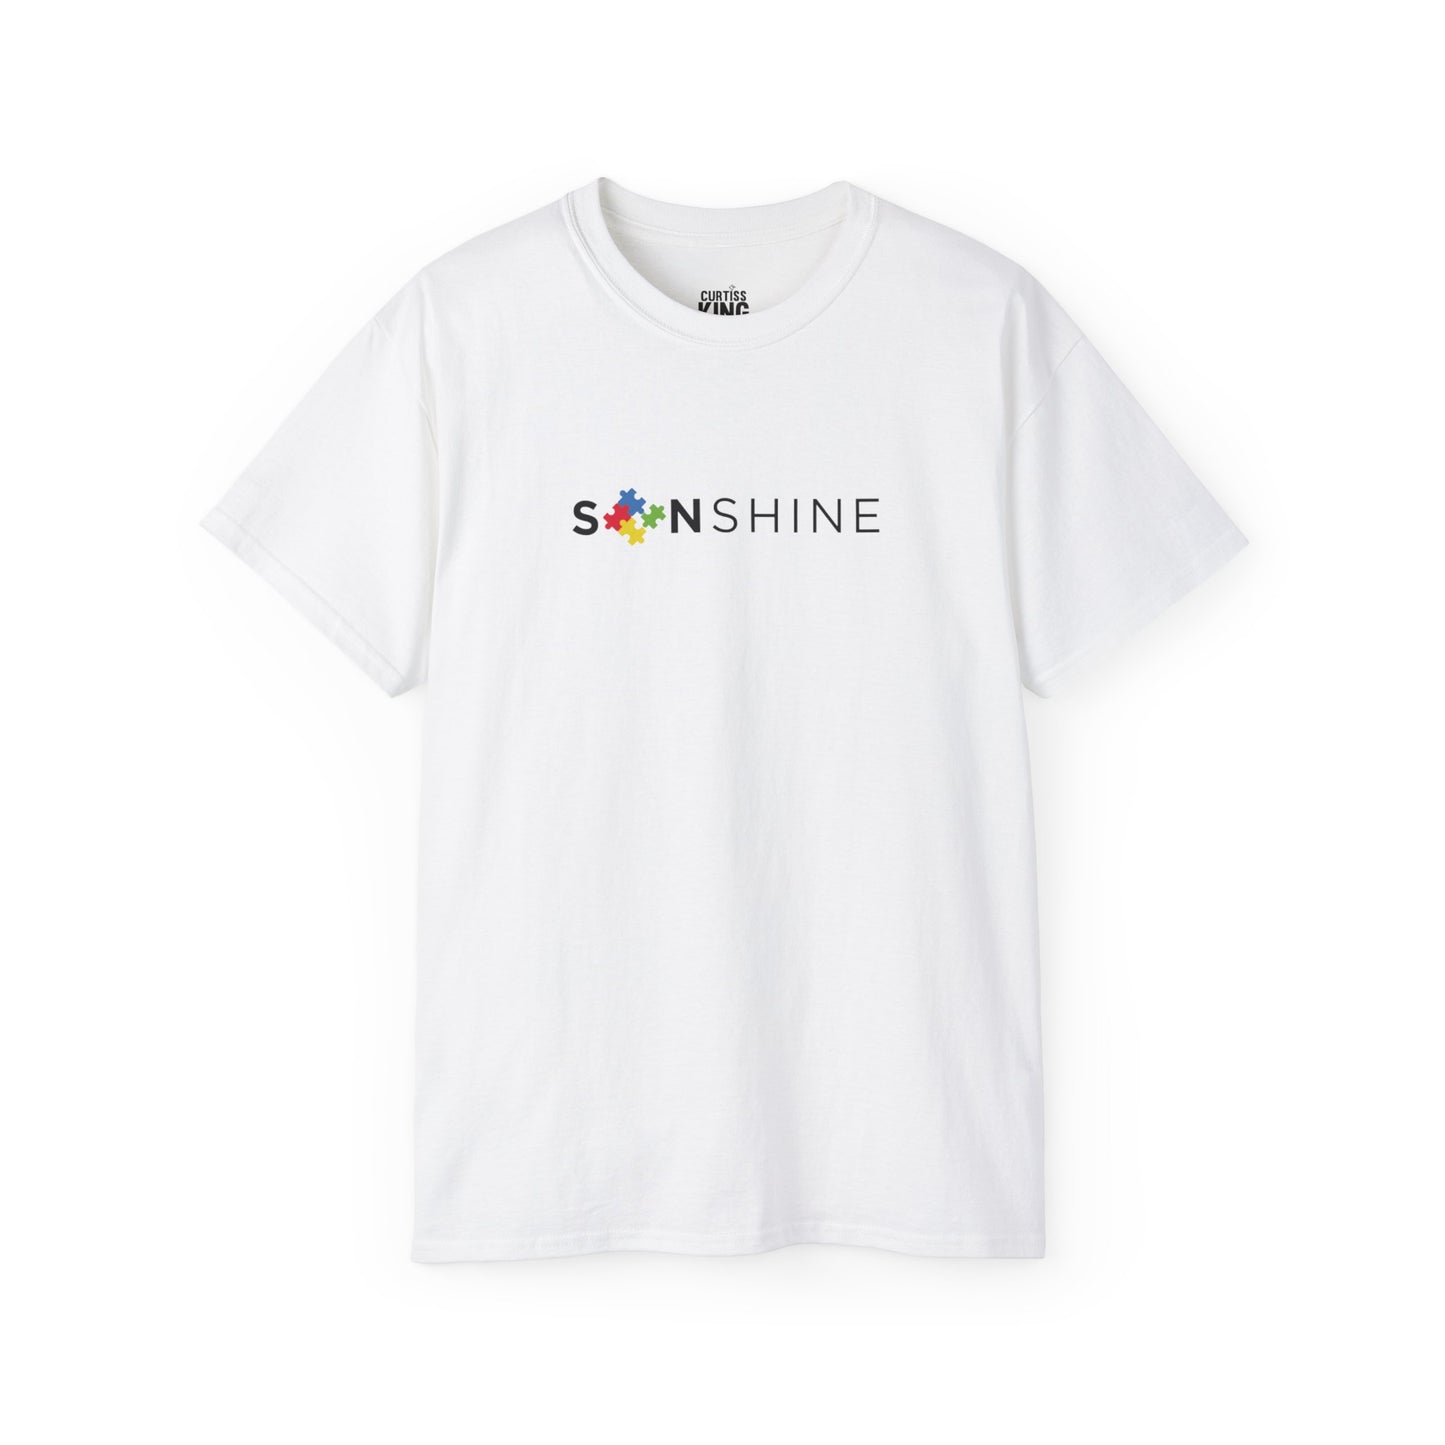 SONshine l [Light Mode]